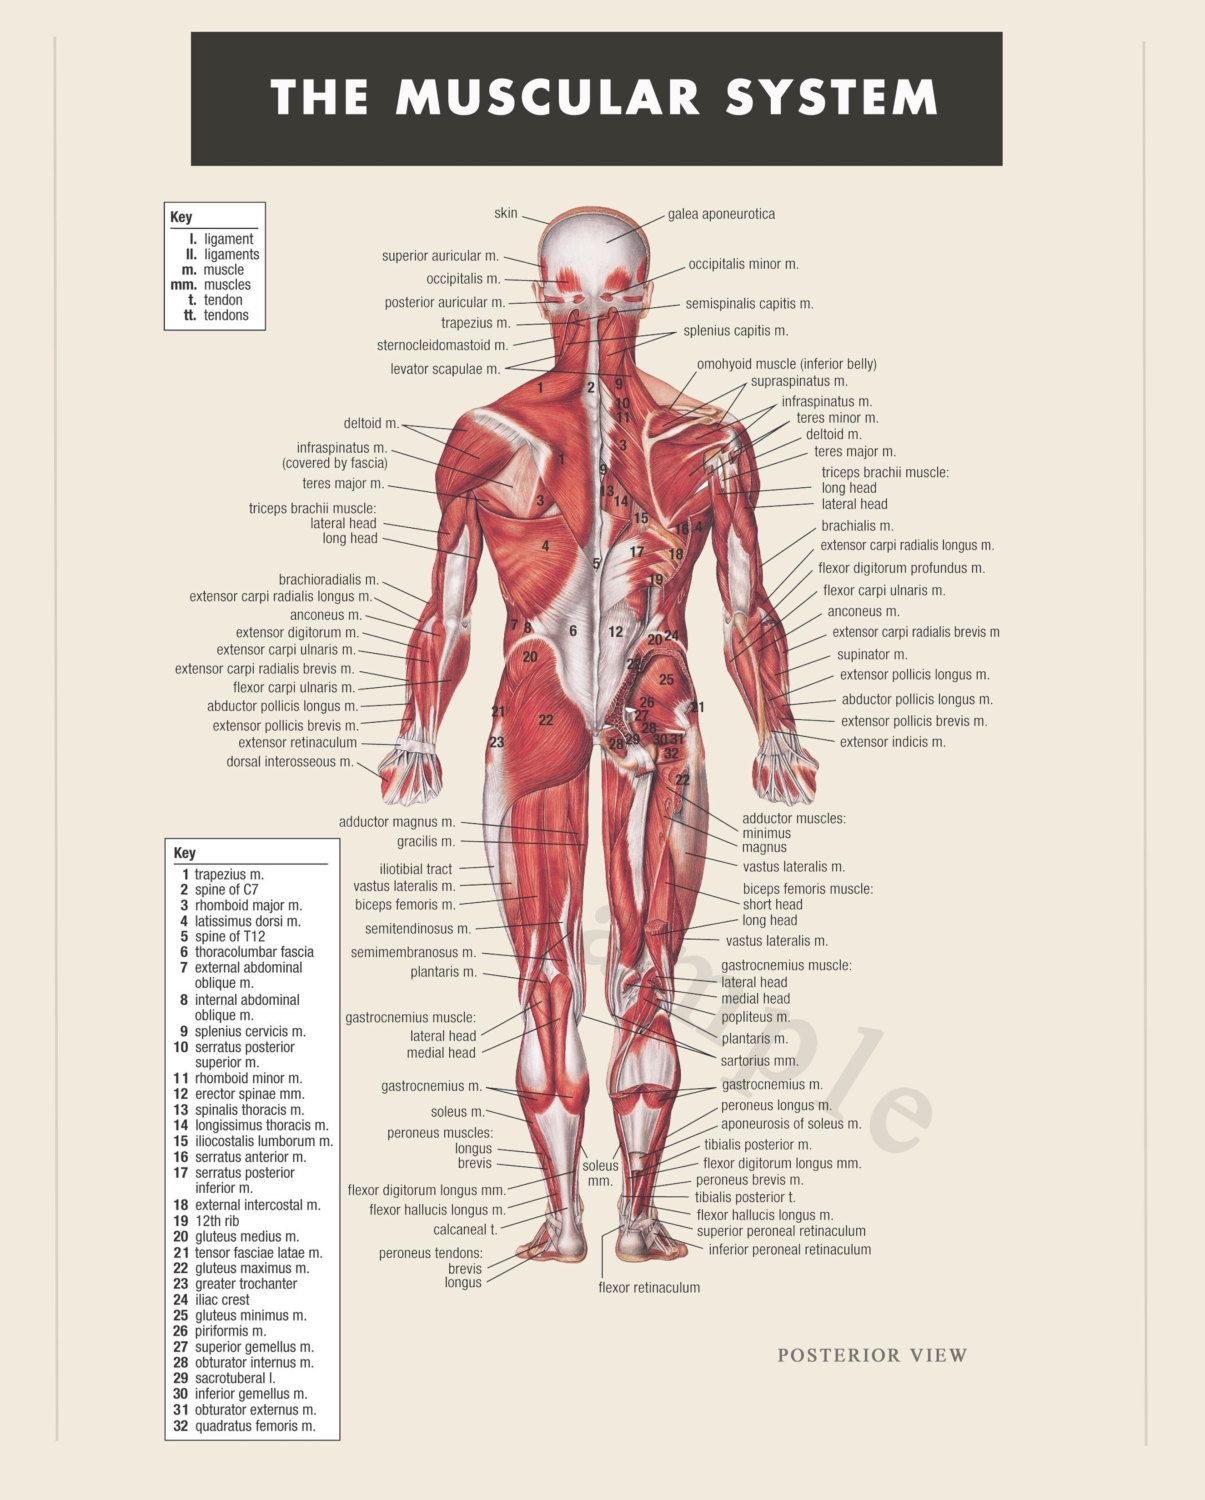 Muscular System Wallpaper. Muscular System Wallpaper, Muscular Chest Wallpaper and Muscular System Background